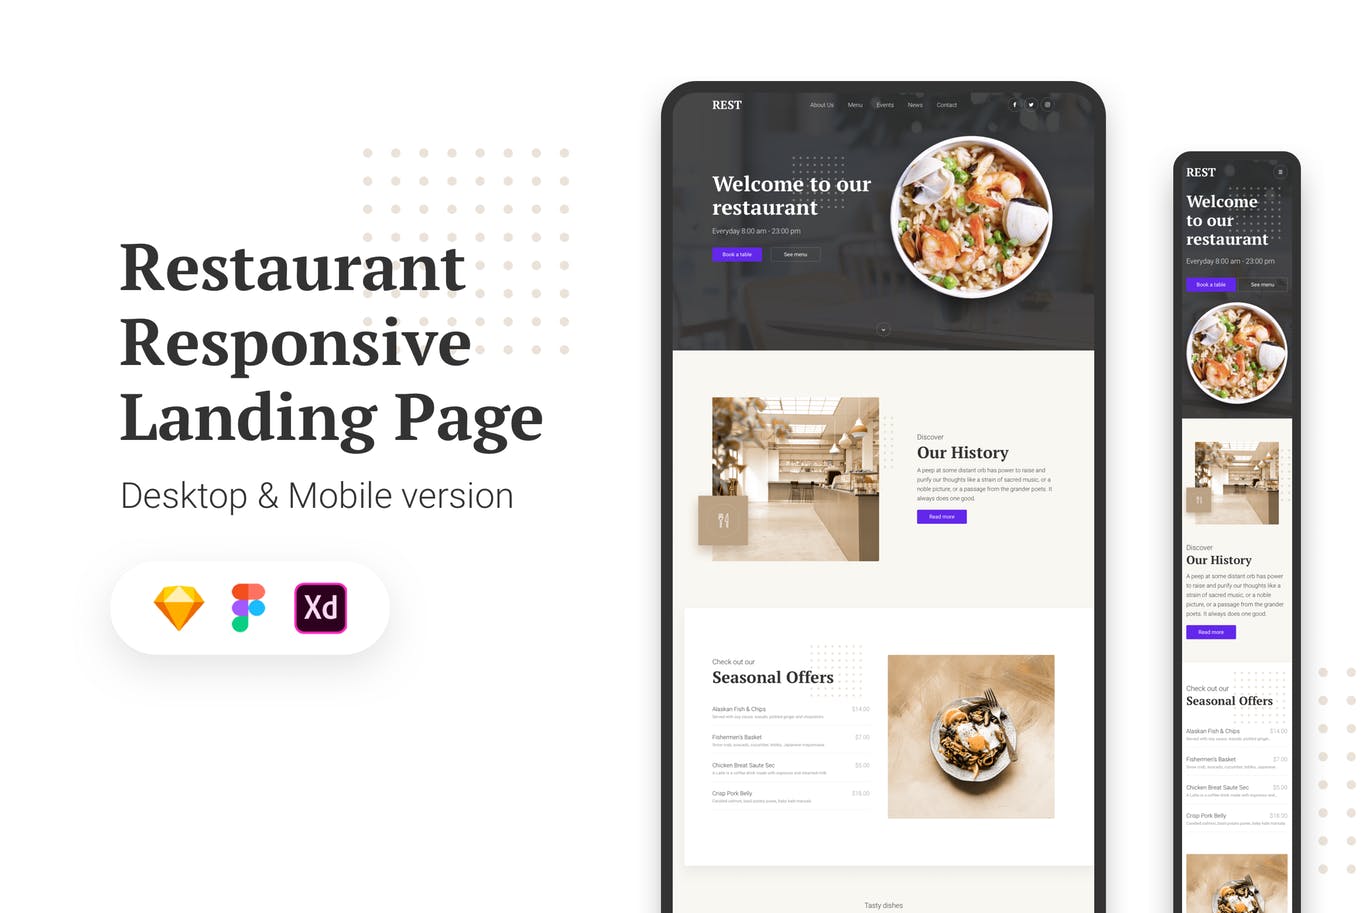 餐馆品牌响应式网站设计UI套件 Restaurant Responsive Landing Page插图